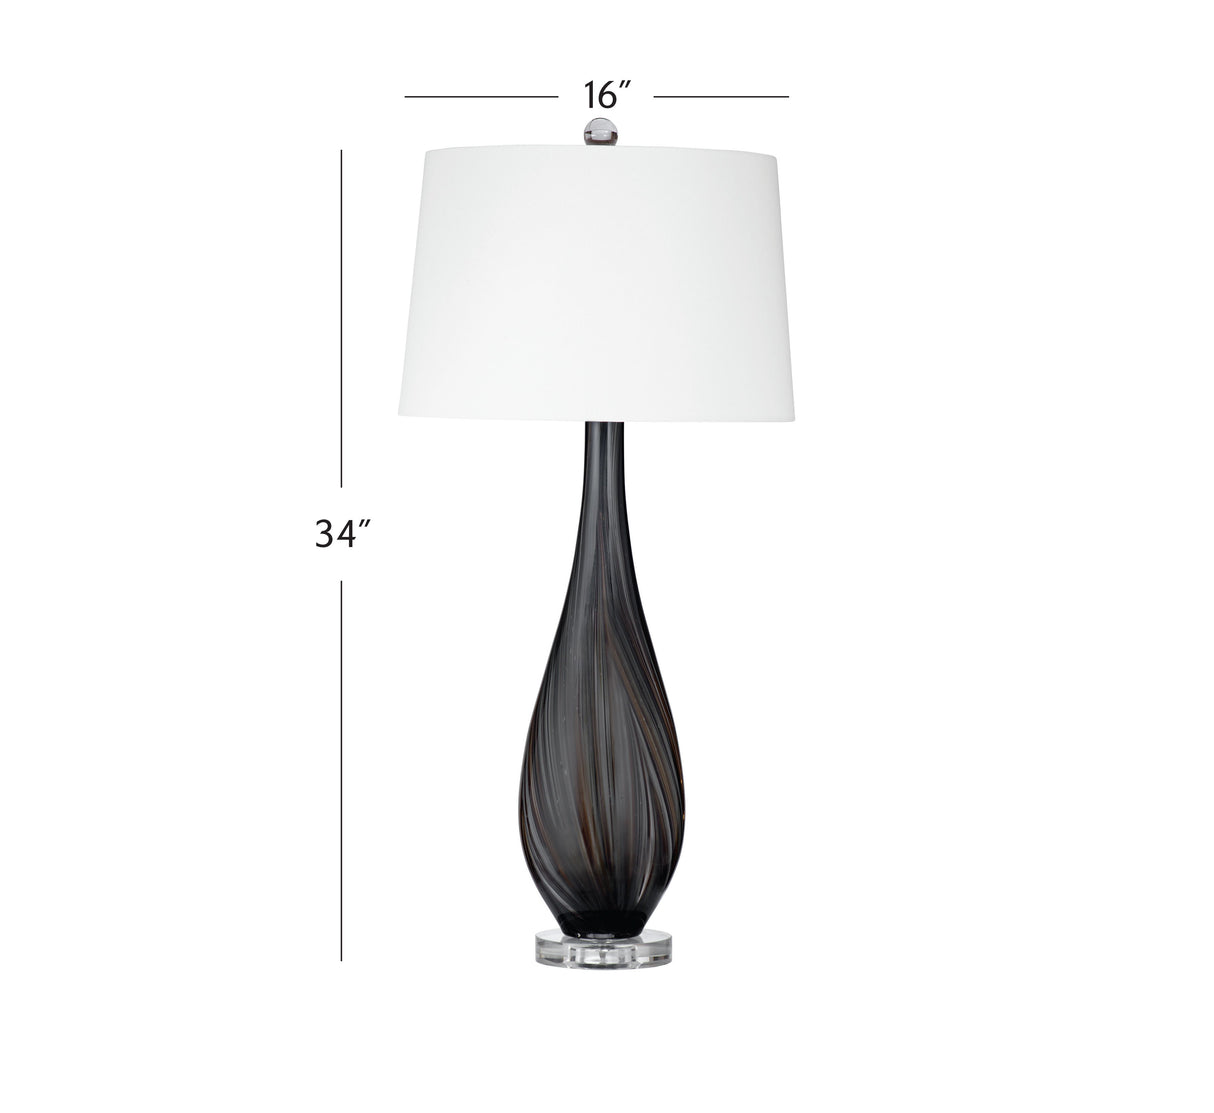 Glass Table Lamp - Black